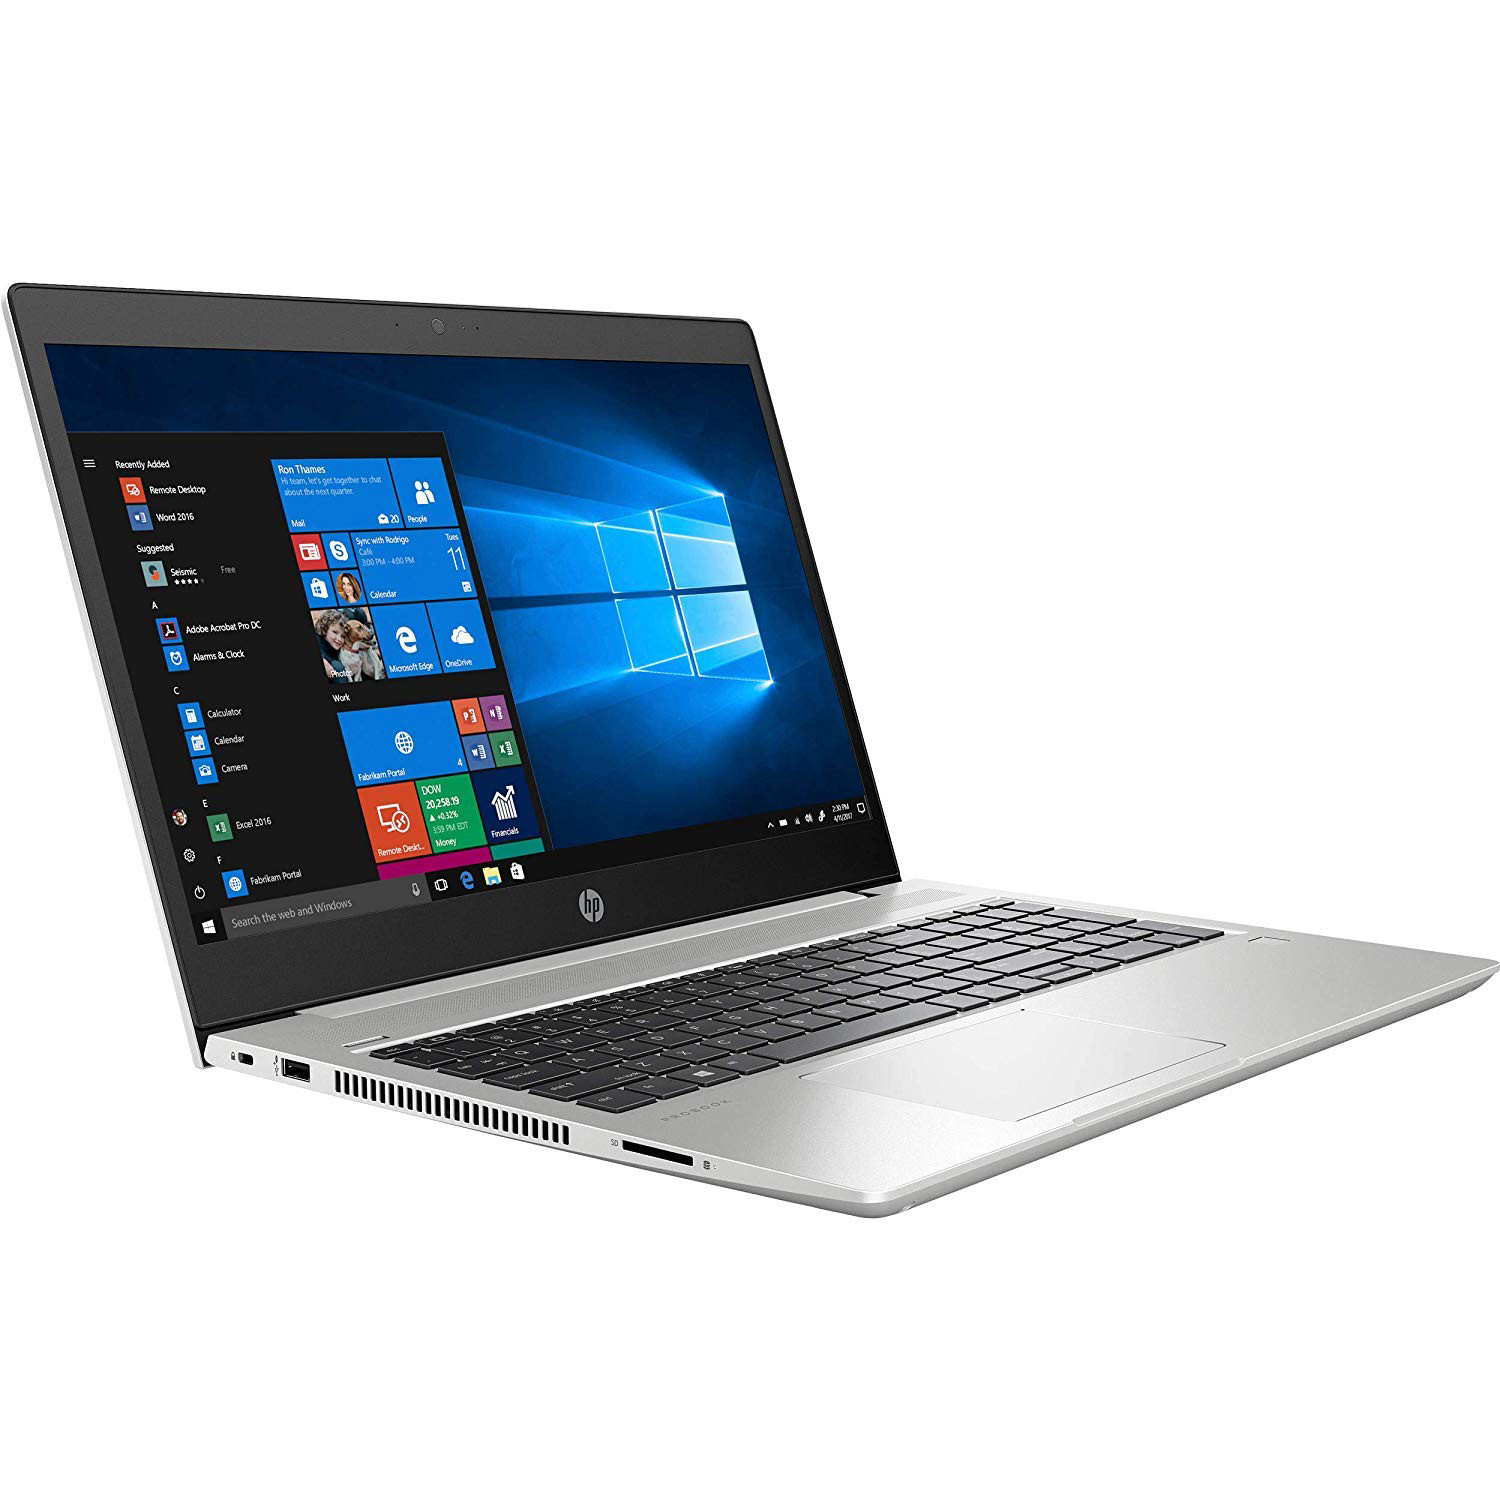 2019 HP Probook 450 G6 15.6" HD Business Laptop (Intel Quad-Core i5-8265U, 16GB DDR4 RAM, 256GB PCIe NVMe M.2 SSD + 1TB HDD, UHD 620) Backlit, USB Type-C, RJ45, HDMI, Windows 10 Pro Professional